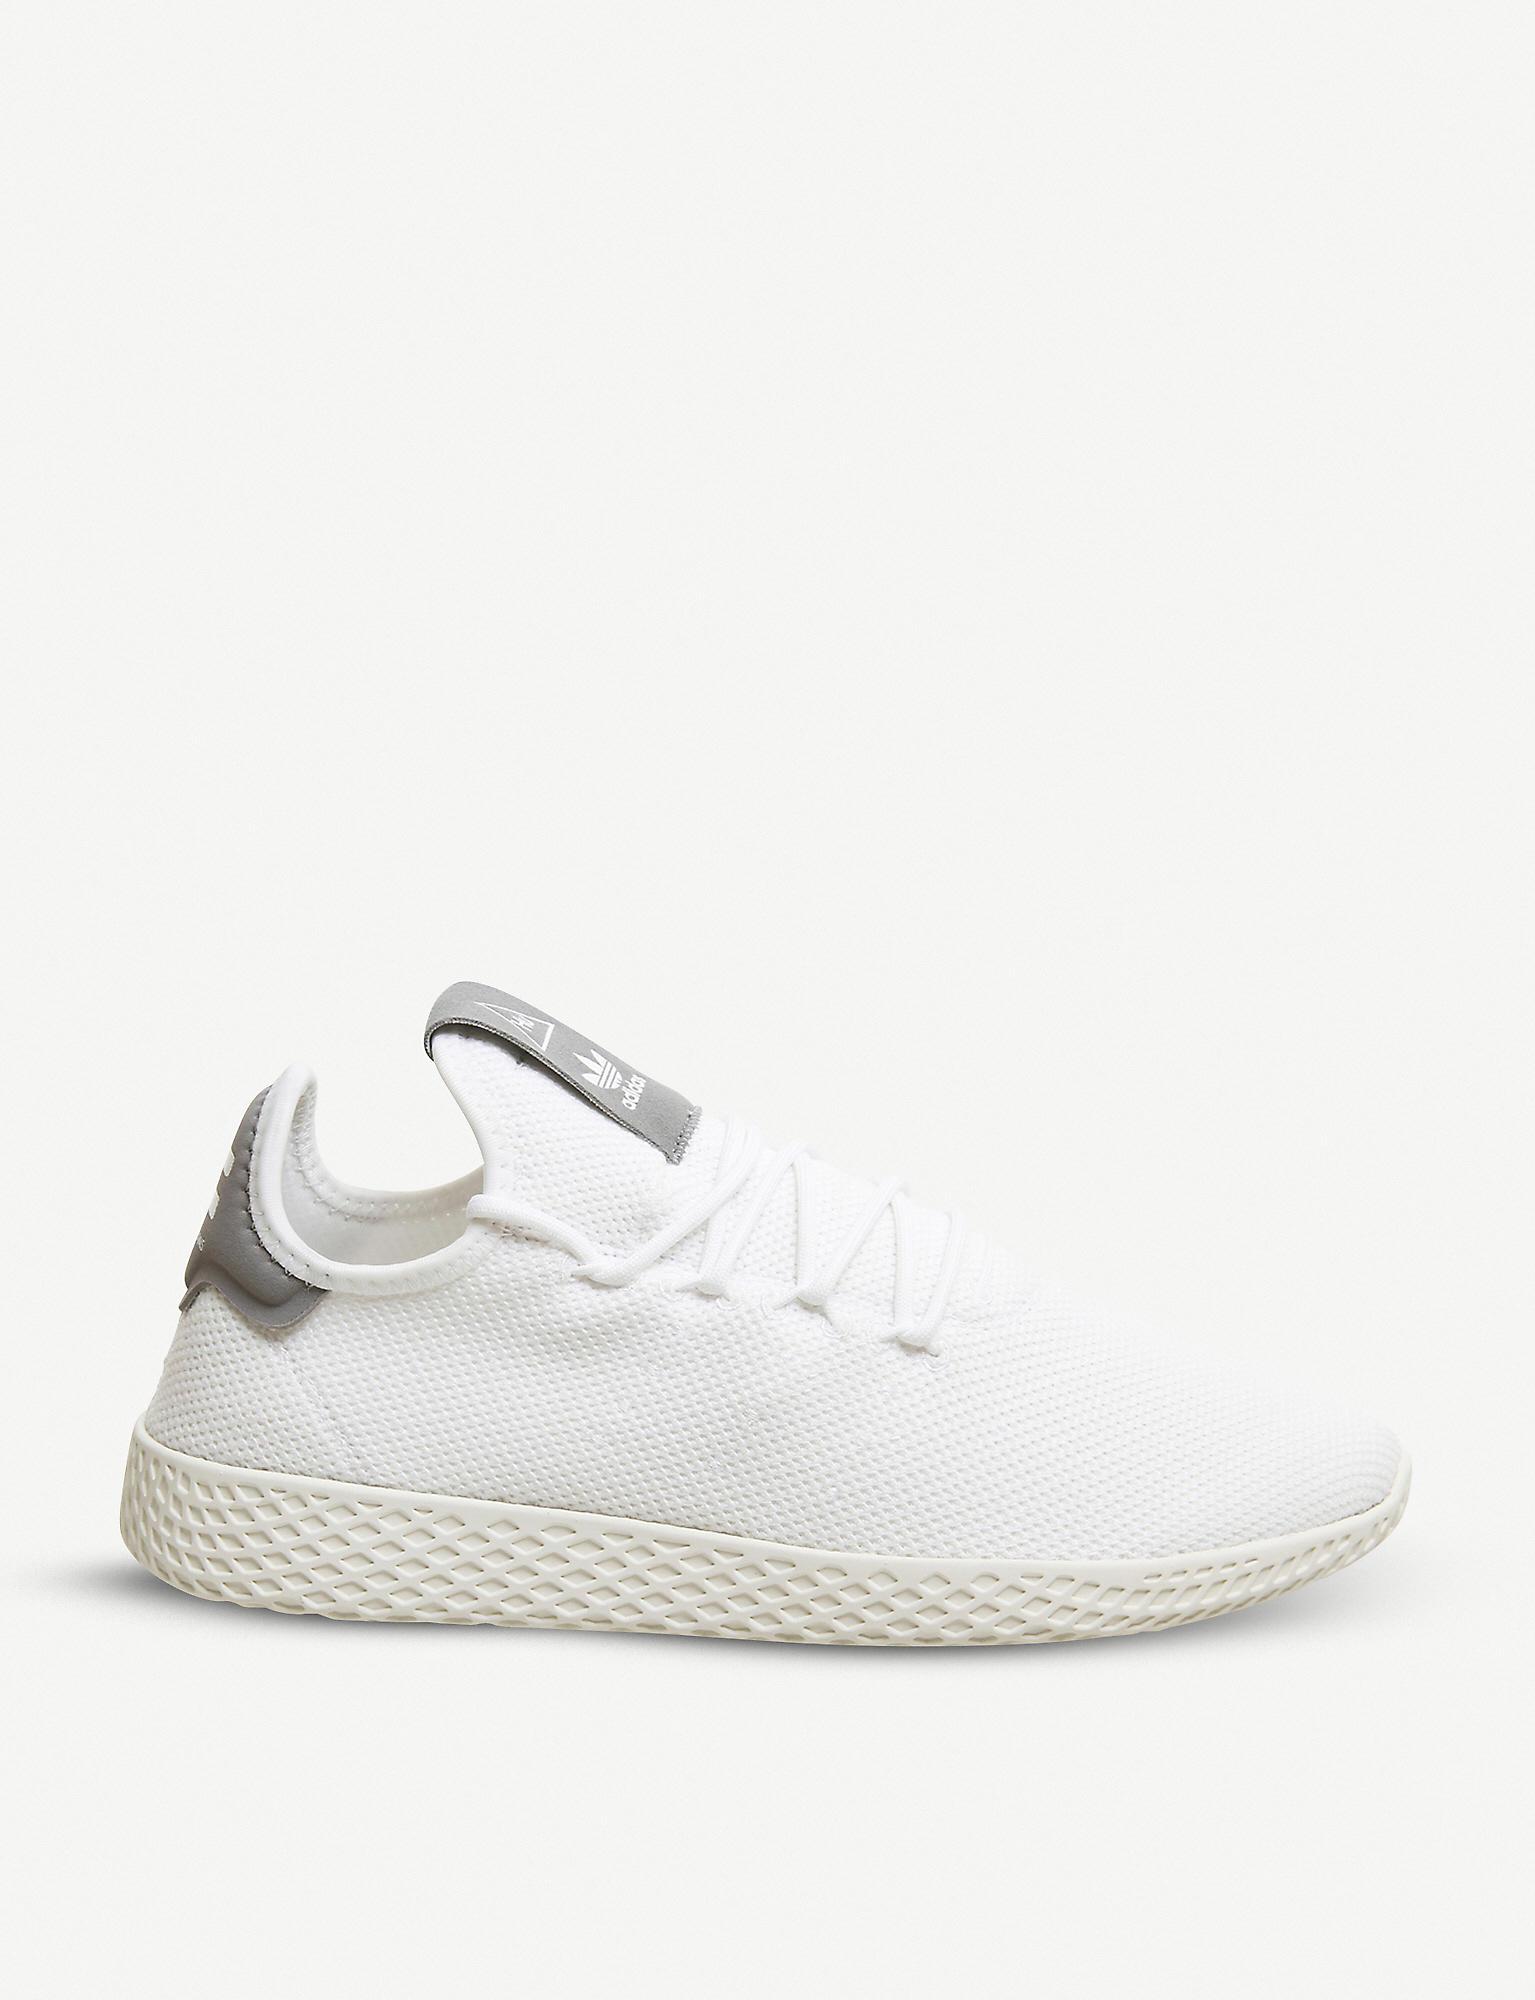 Adidas White Cotton Knit Pharrell Williams Tennis Hu Sneakers Size